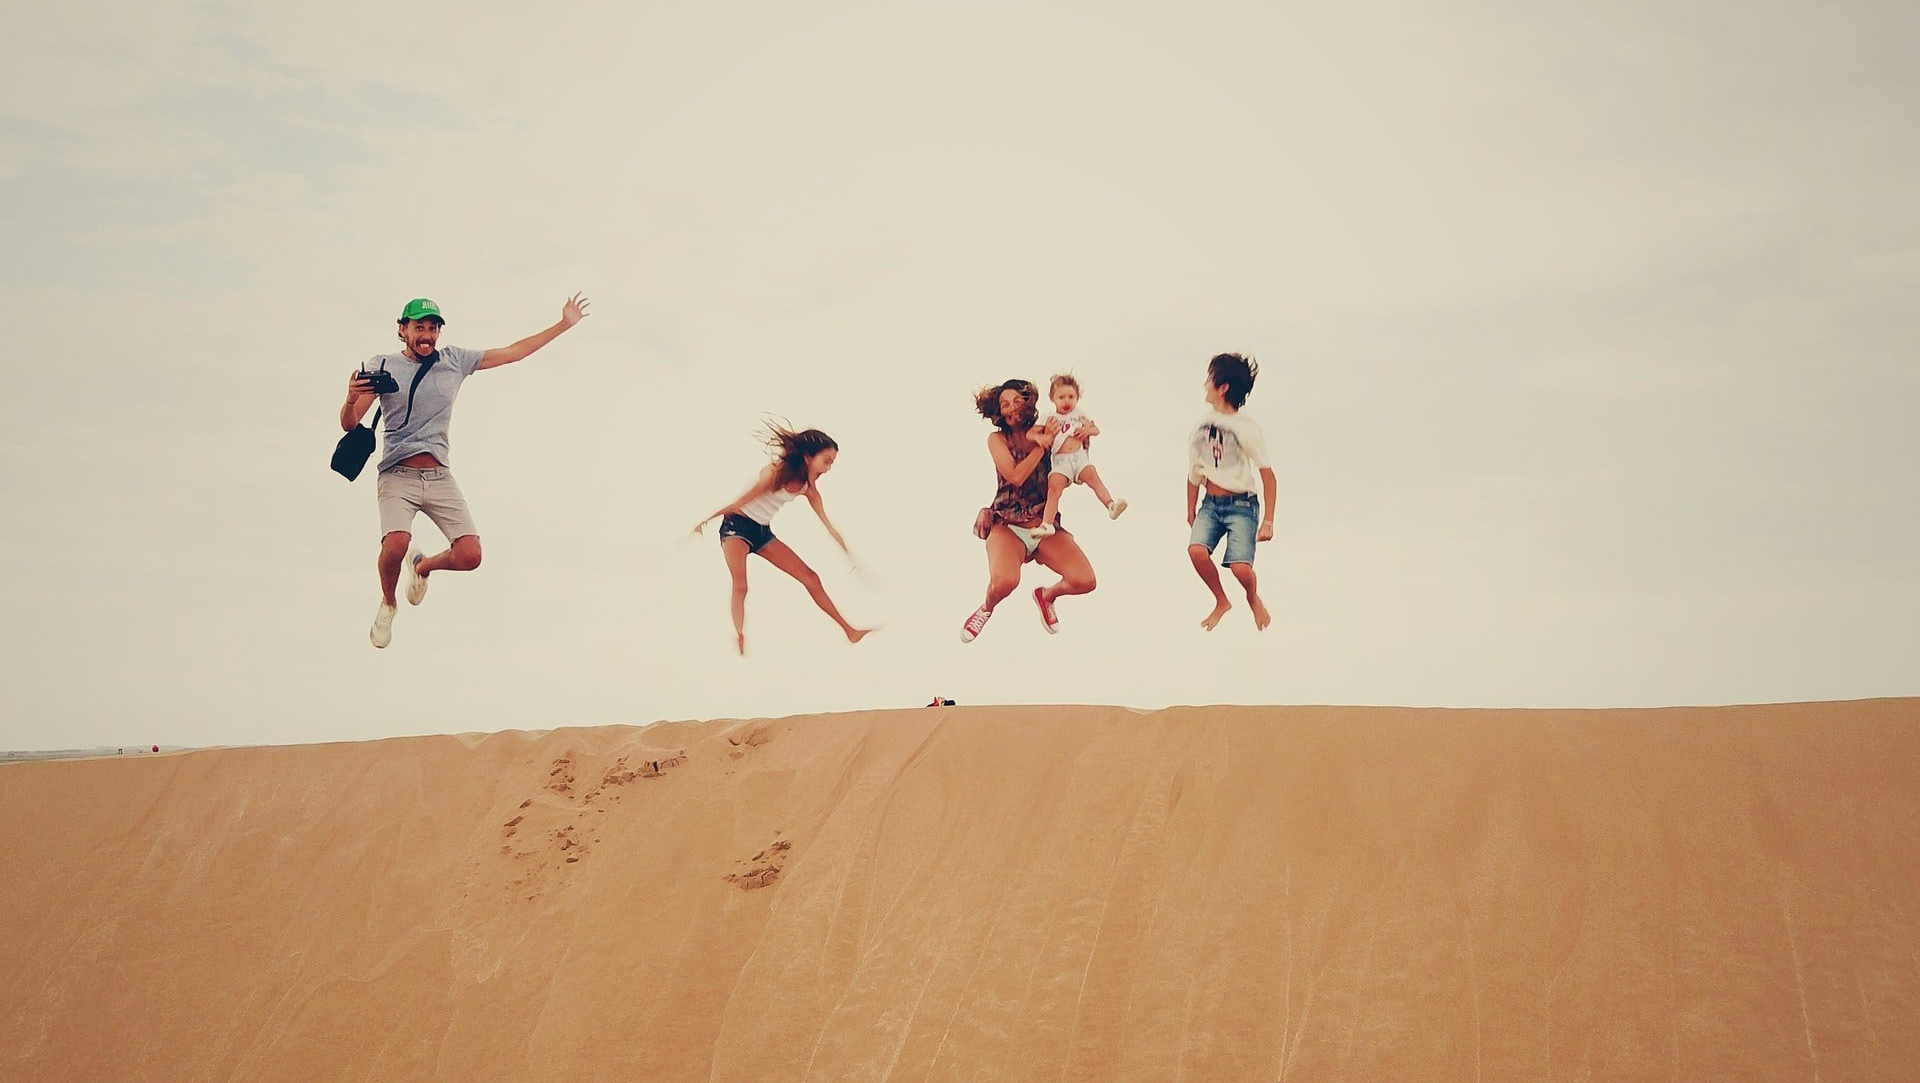 gezin springt in de lucht vanaf zandduin